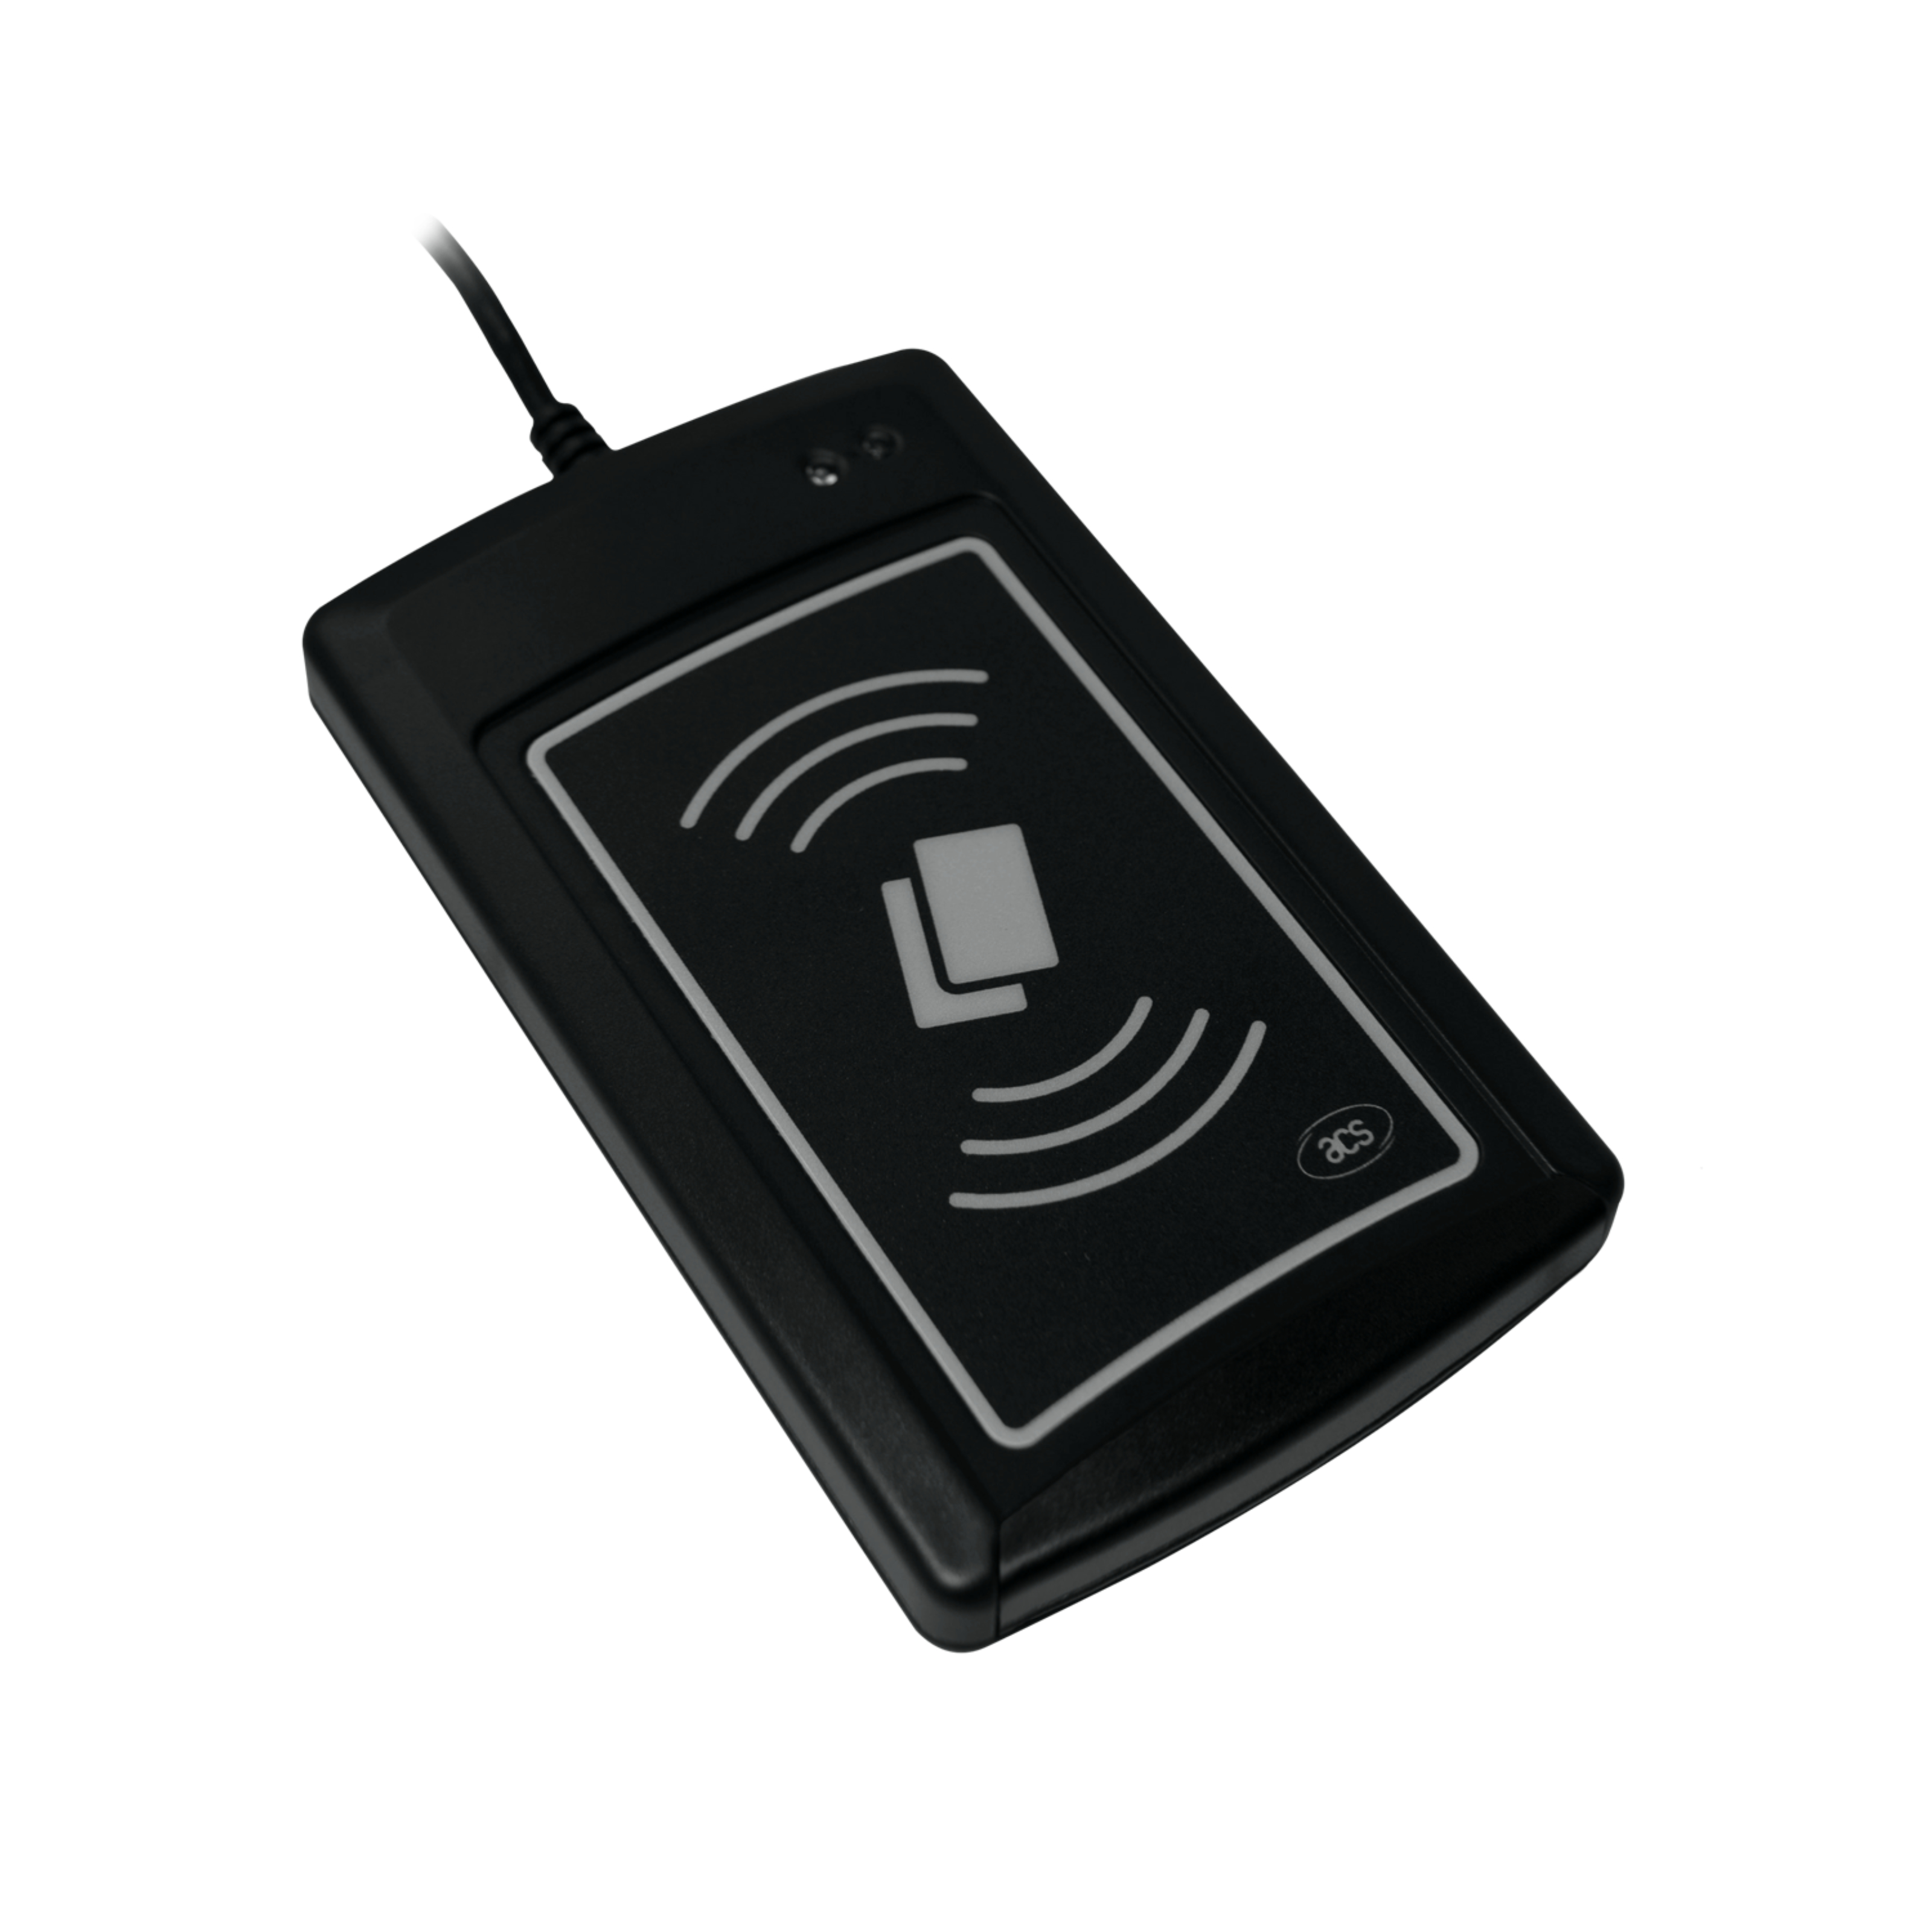 NFC UID Reader ACR1281U-C2 - schwarz - keyboard emulation